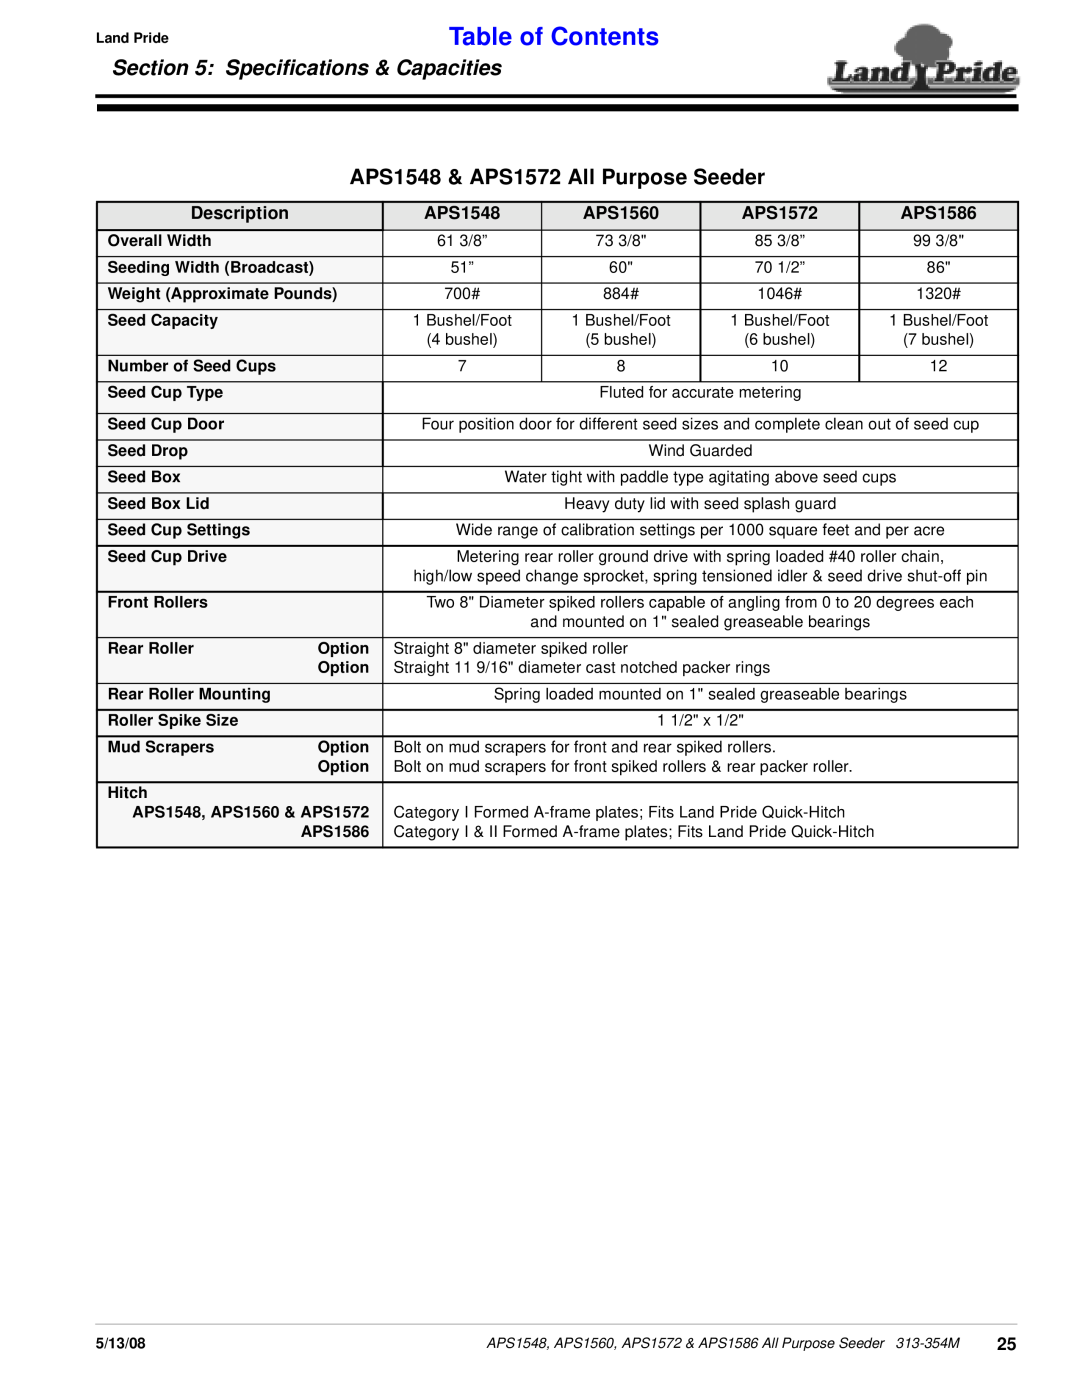 Land Pride manual Speciﬁcations & Capacities, APS1548 & APS1572 All Purpose Seeder, Description, APS1560, APS1586 